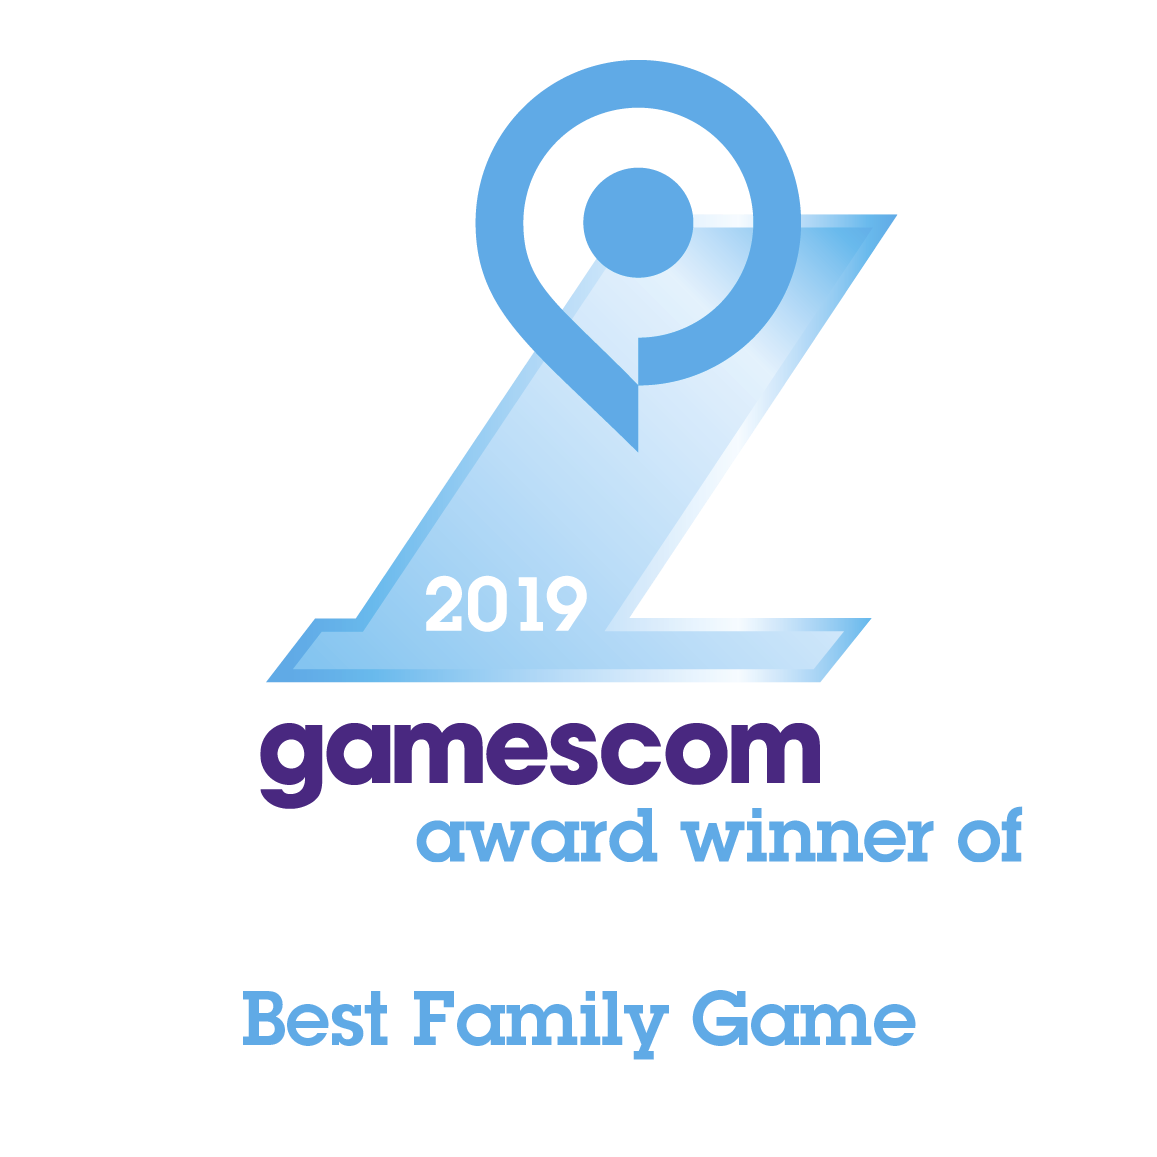 gamescom nagrada